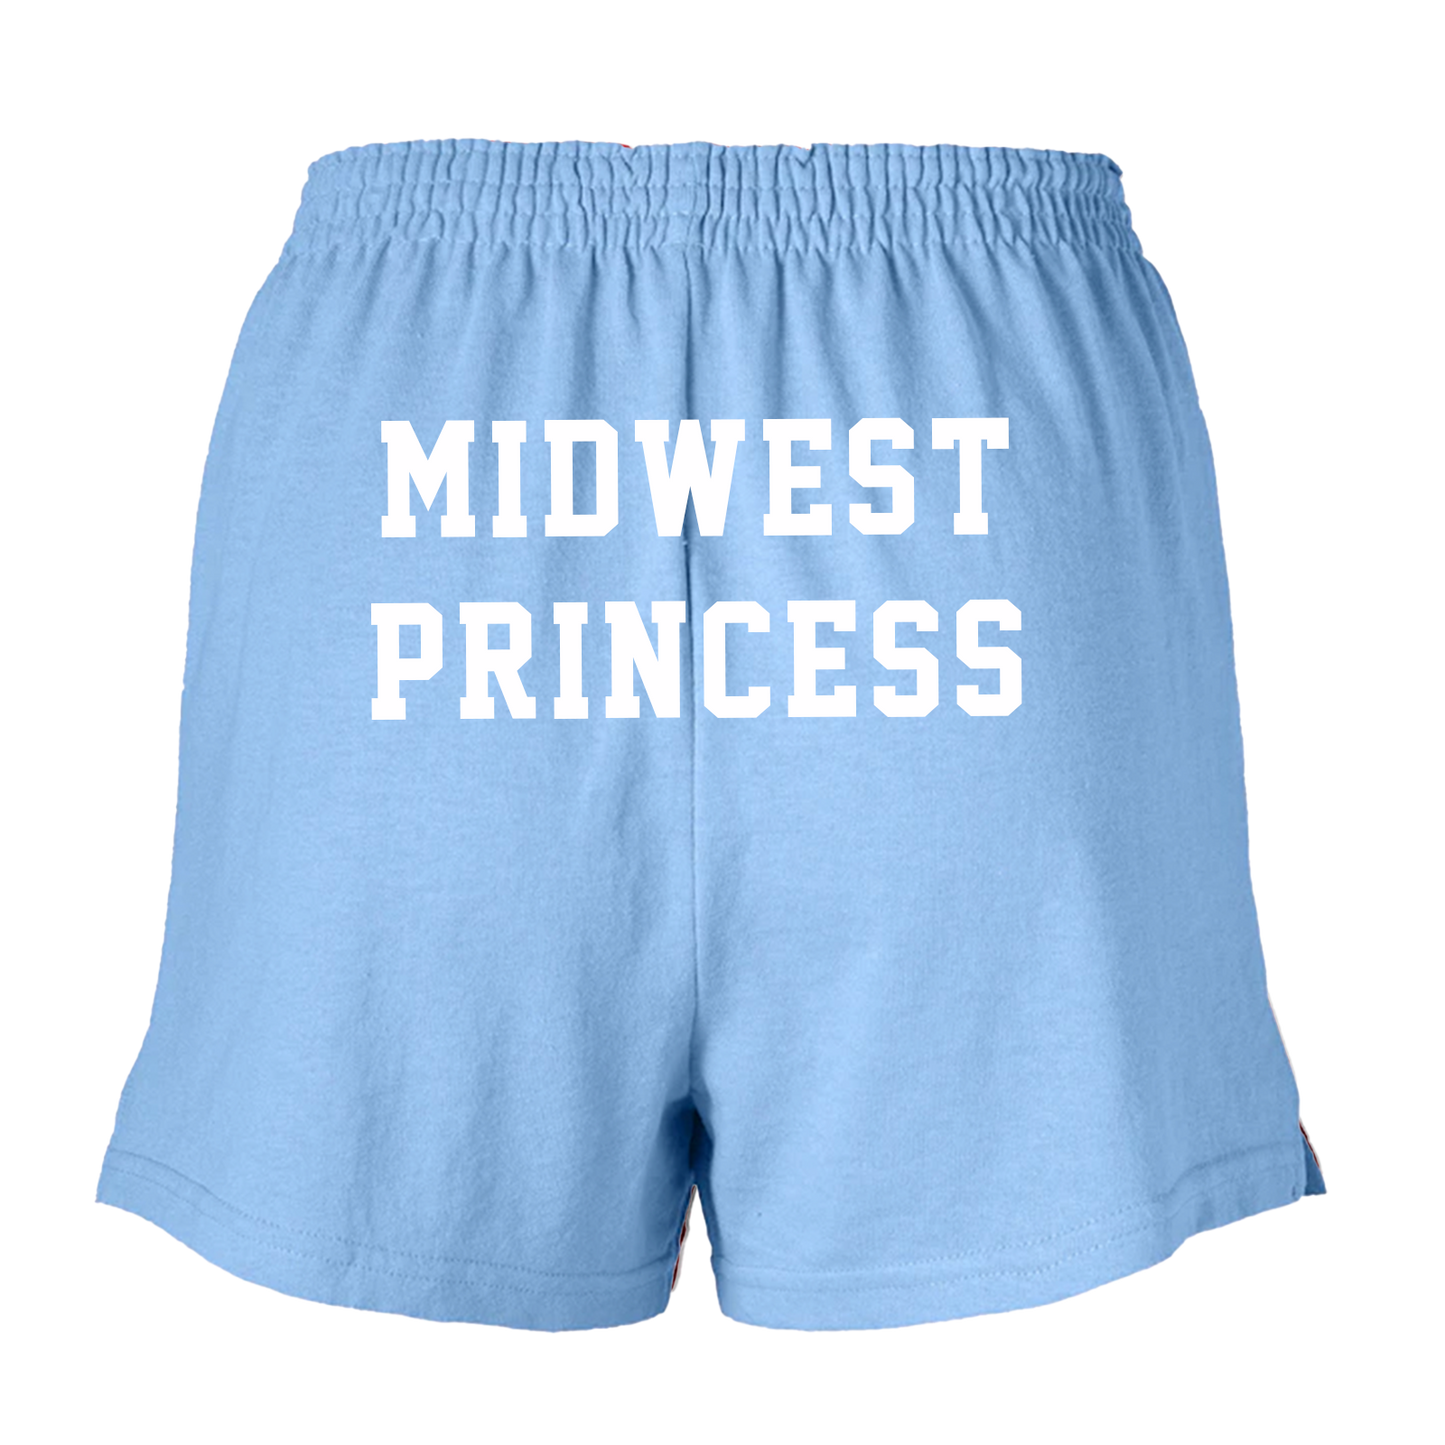 Midwest Princess Shorts